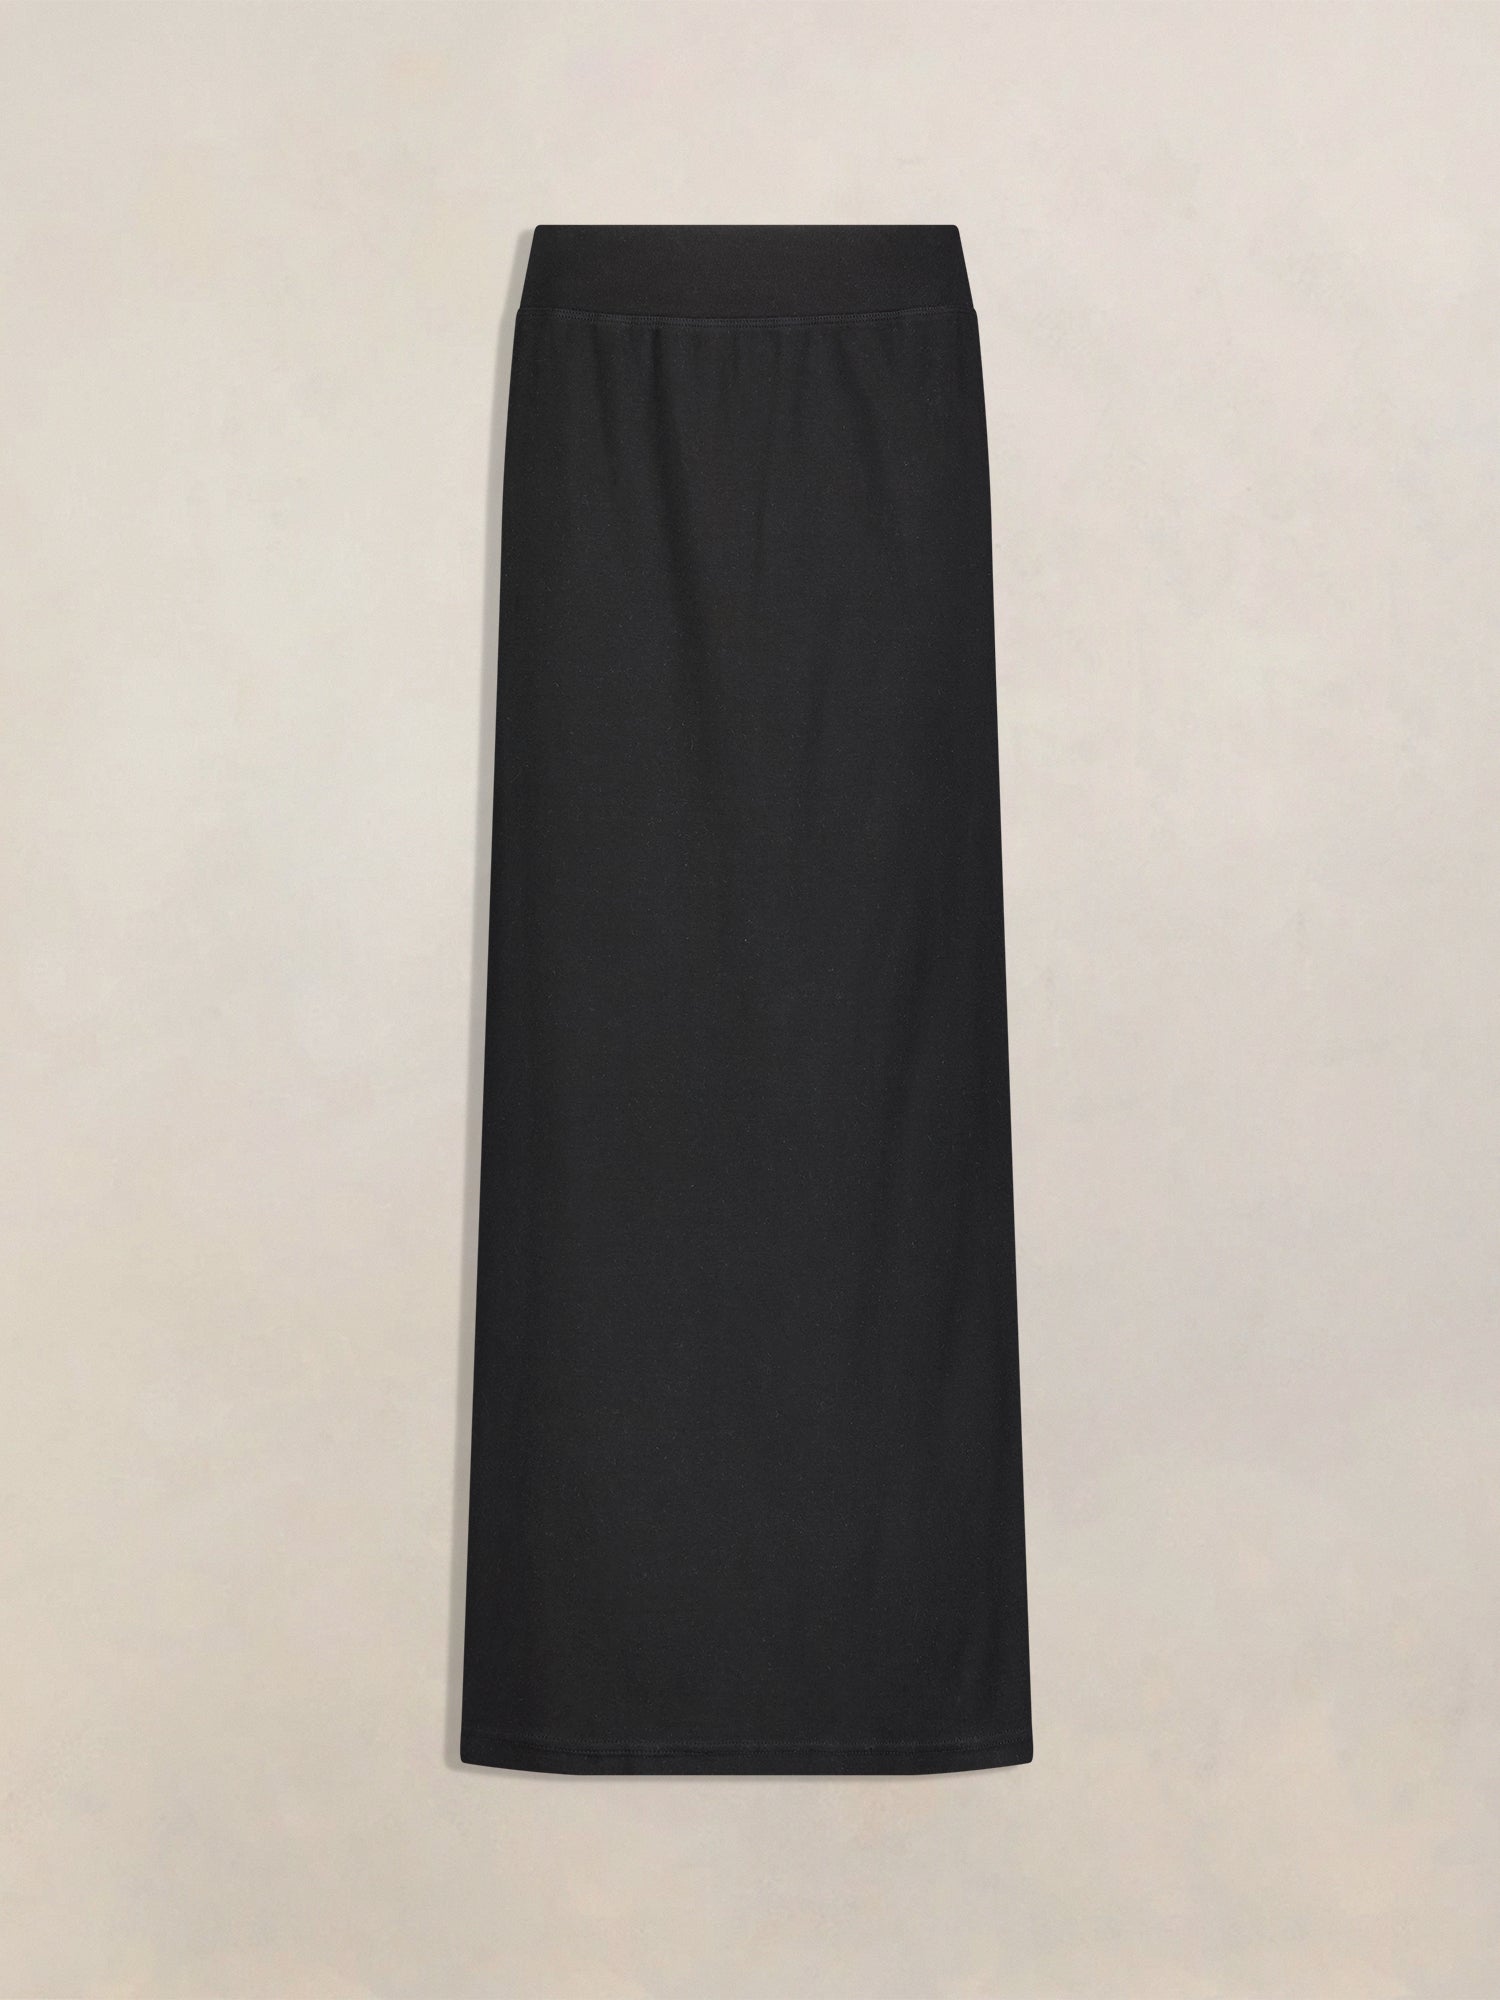 Hardtail Long Column Skirt B-149 Hard Tail